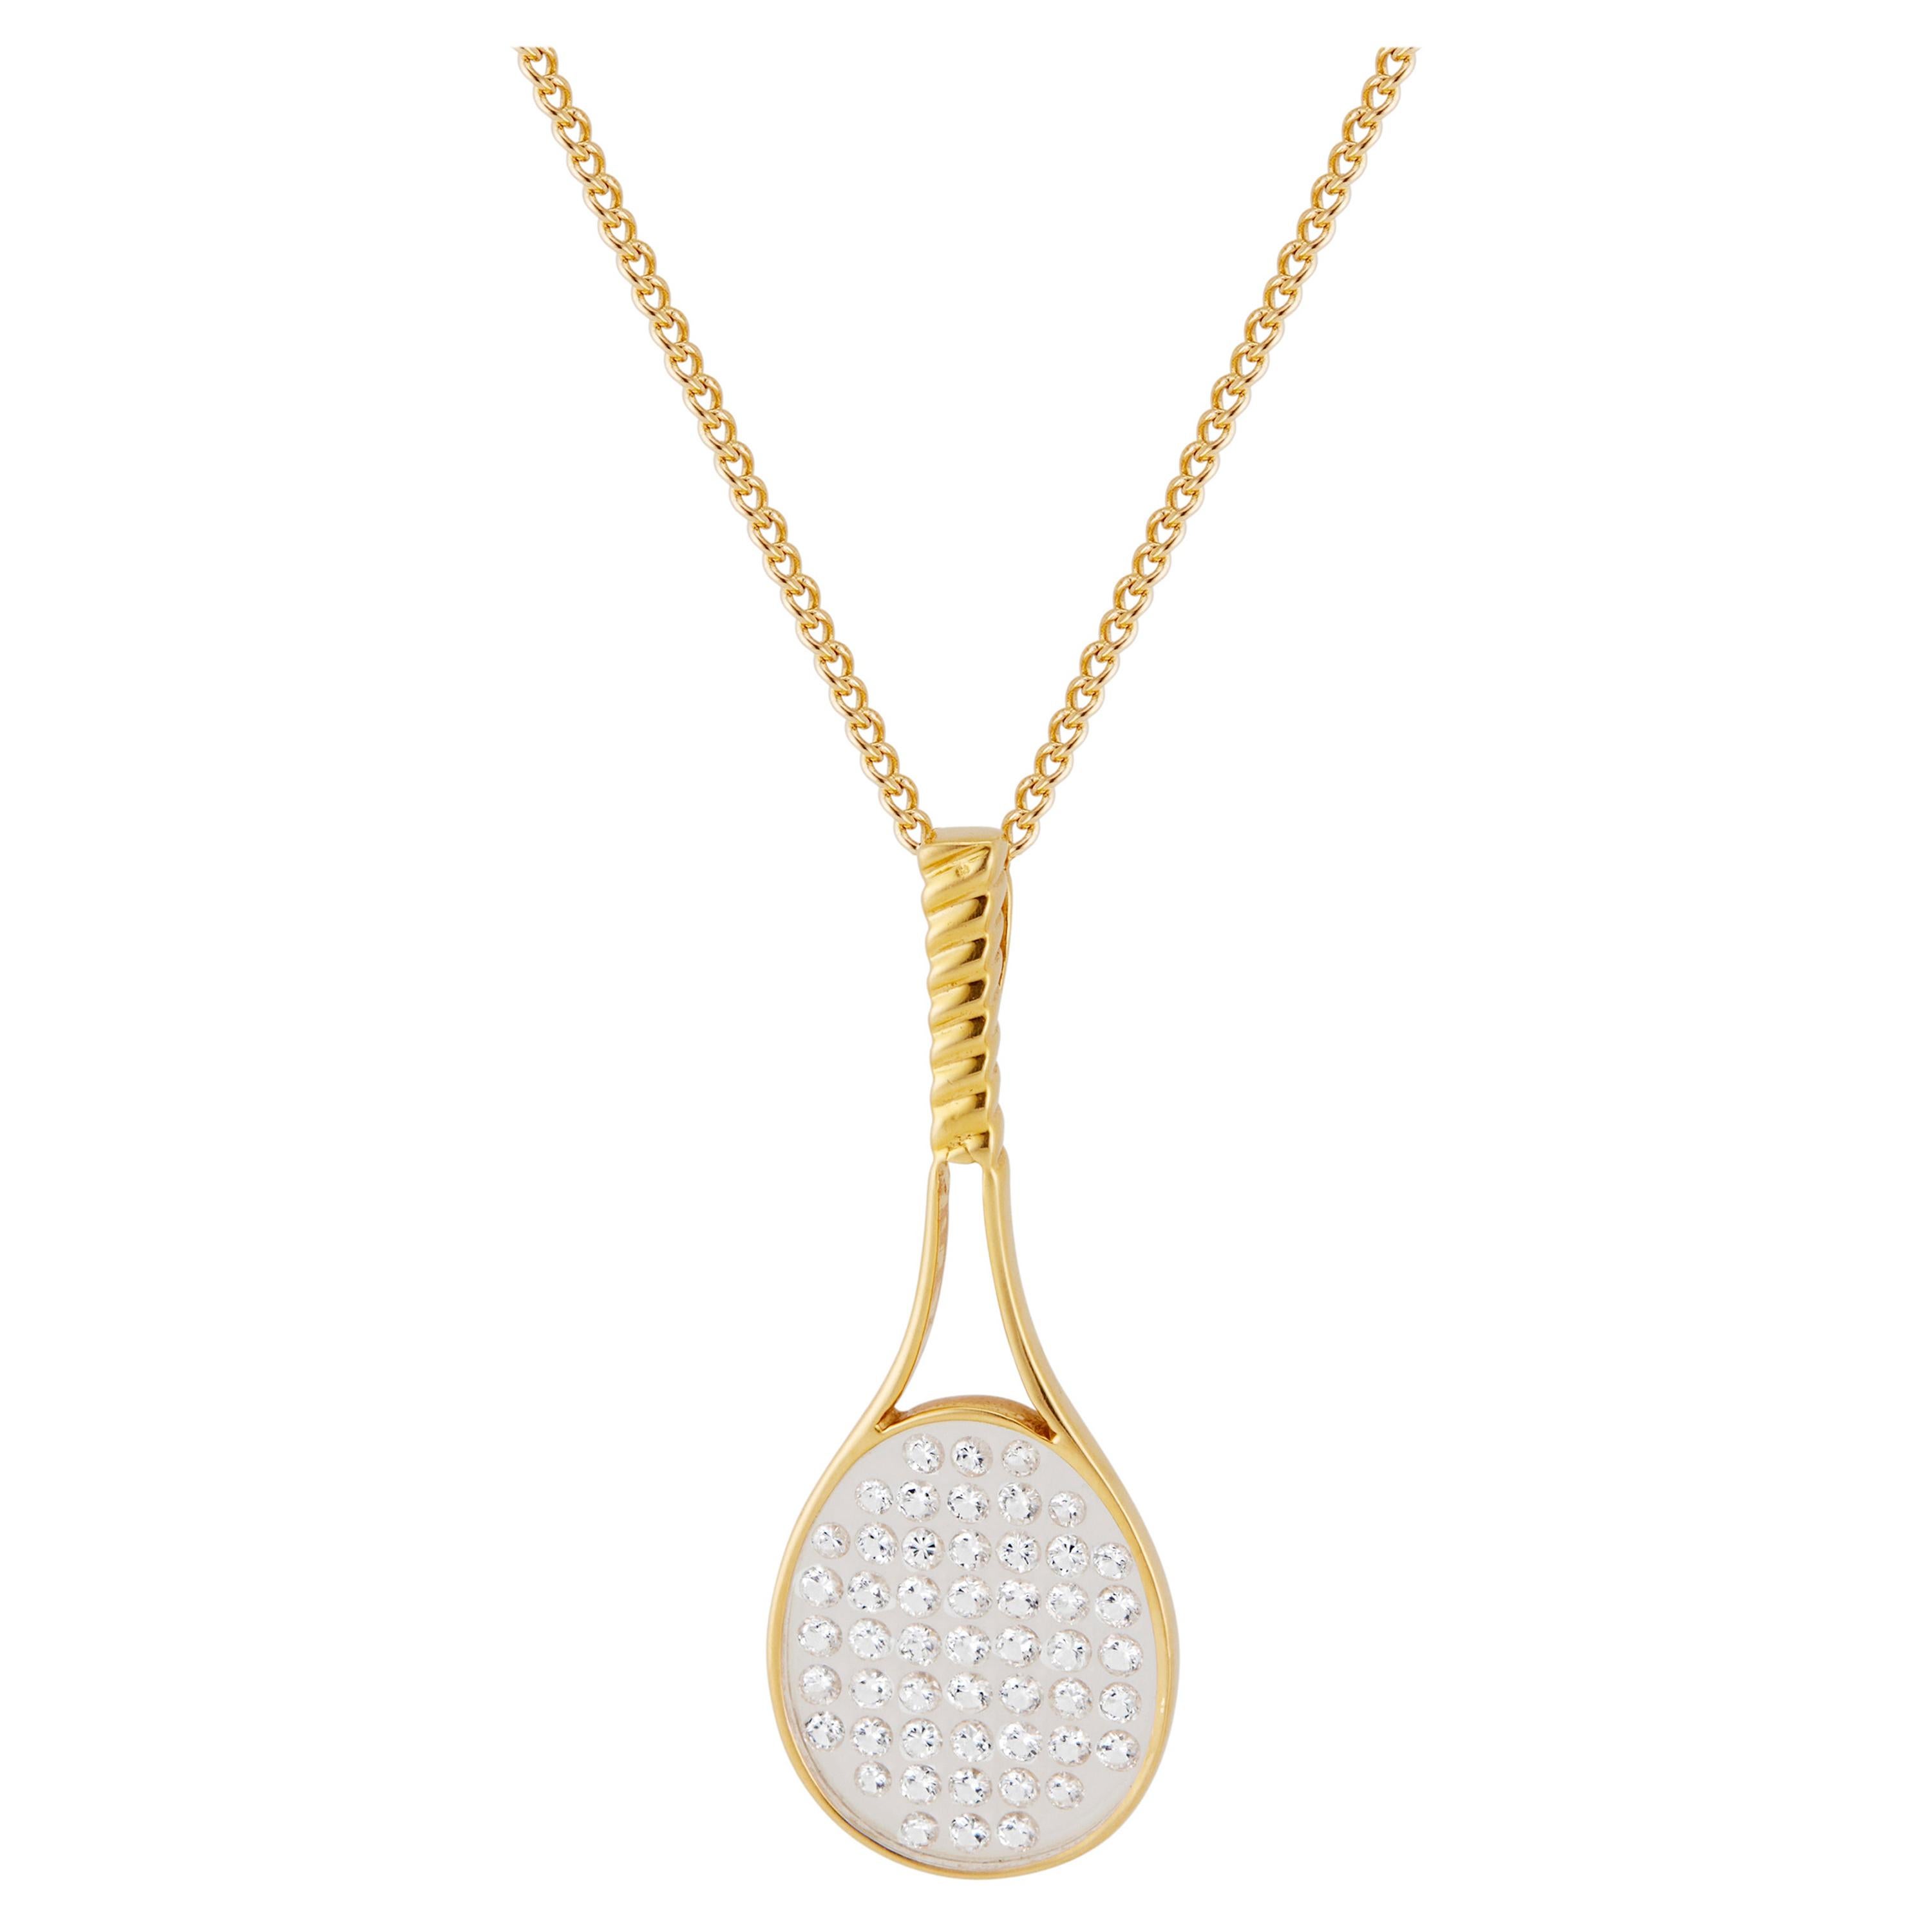 CBI .50 Carat Diamond Yellow Gold Tennis Racket Pendant Necklace